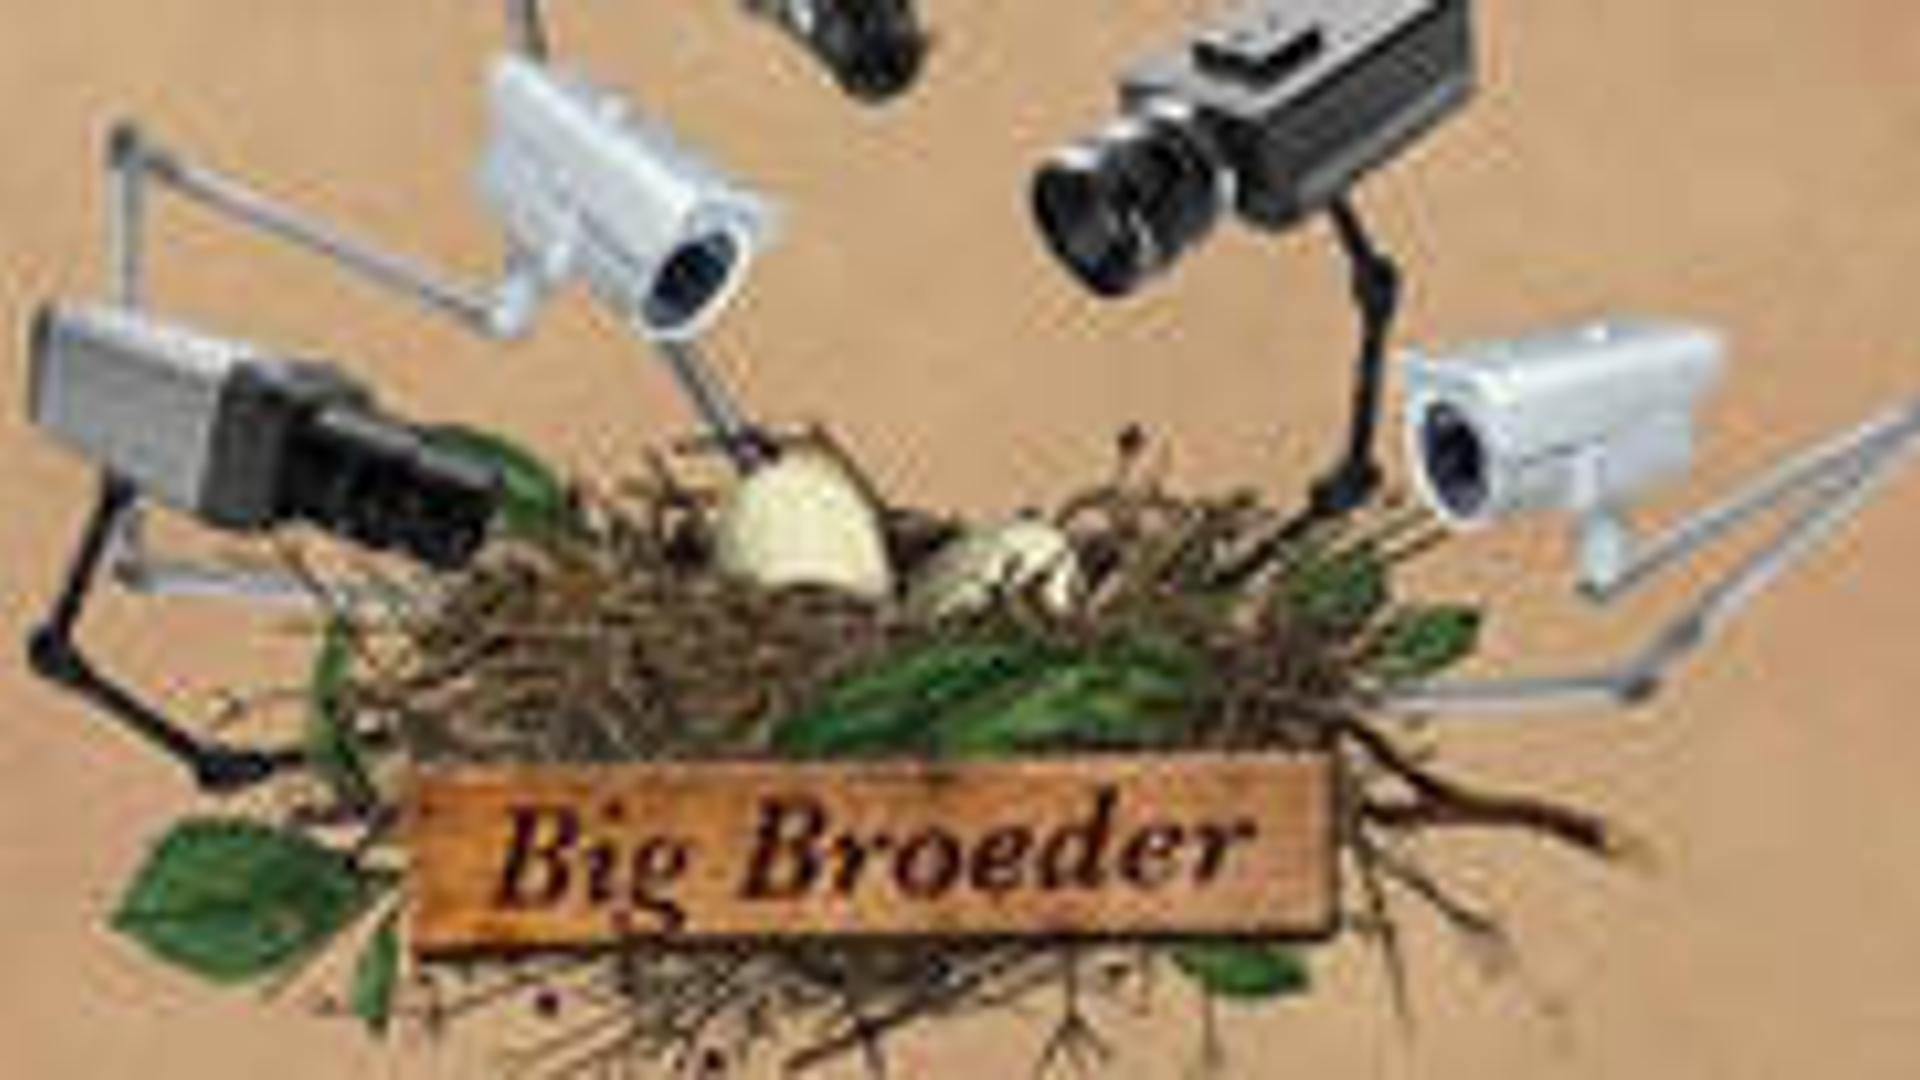 Big_Broeder_04.jpg